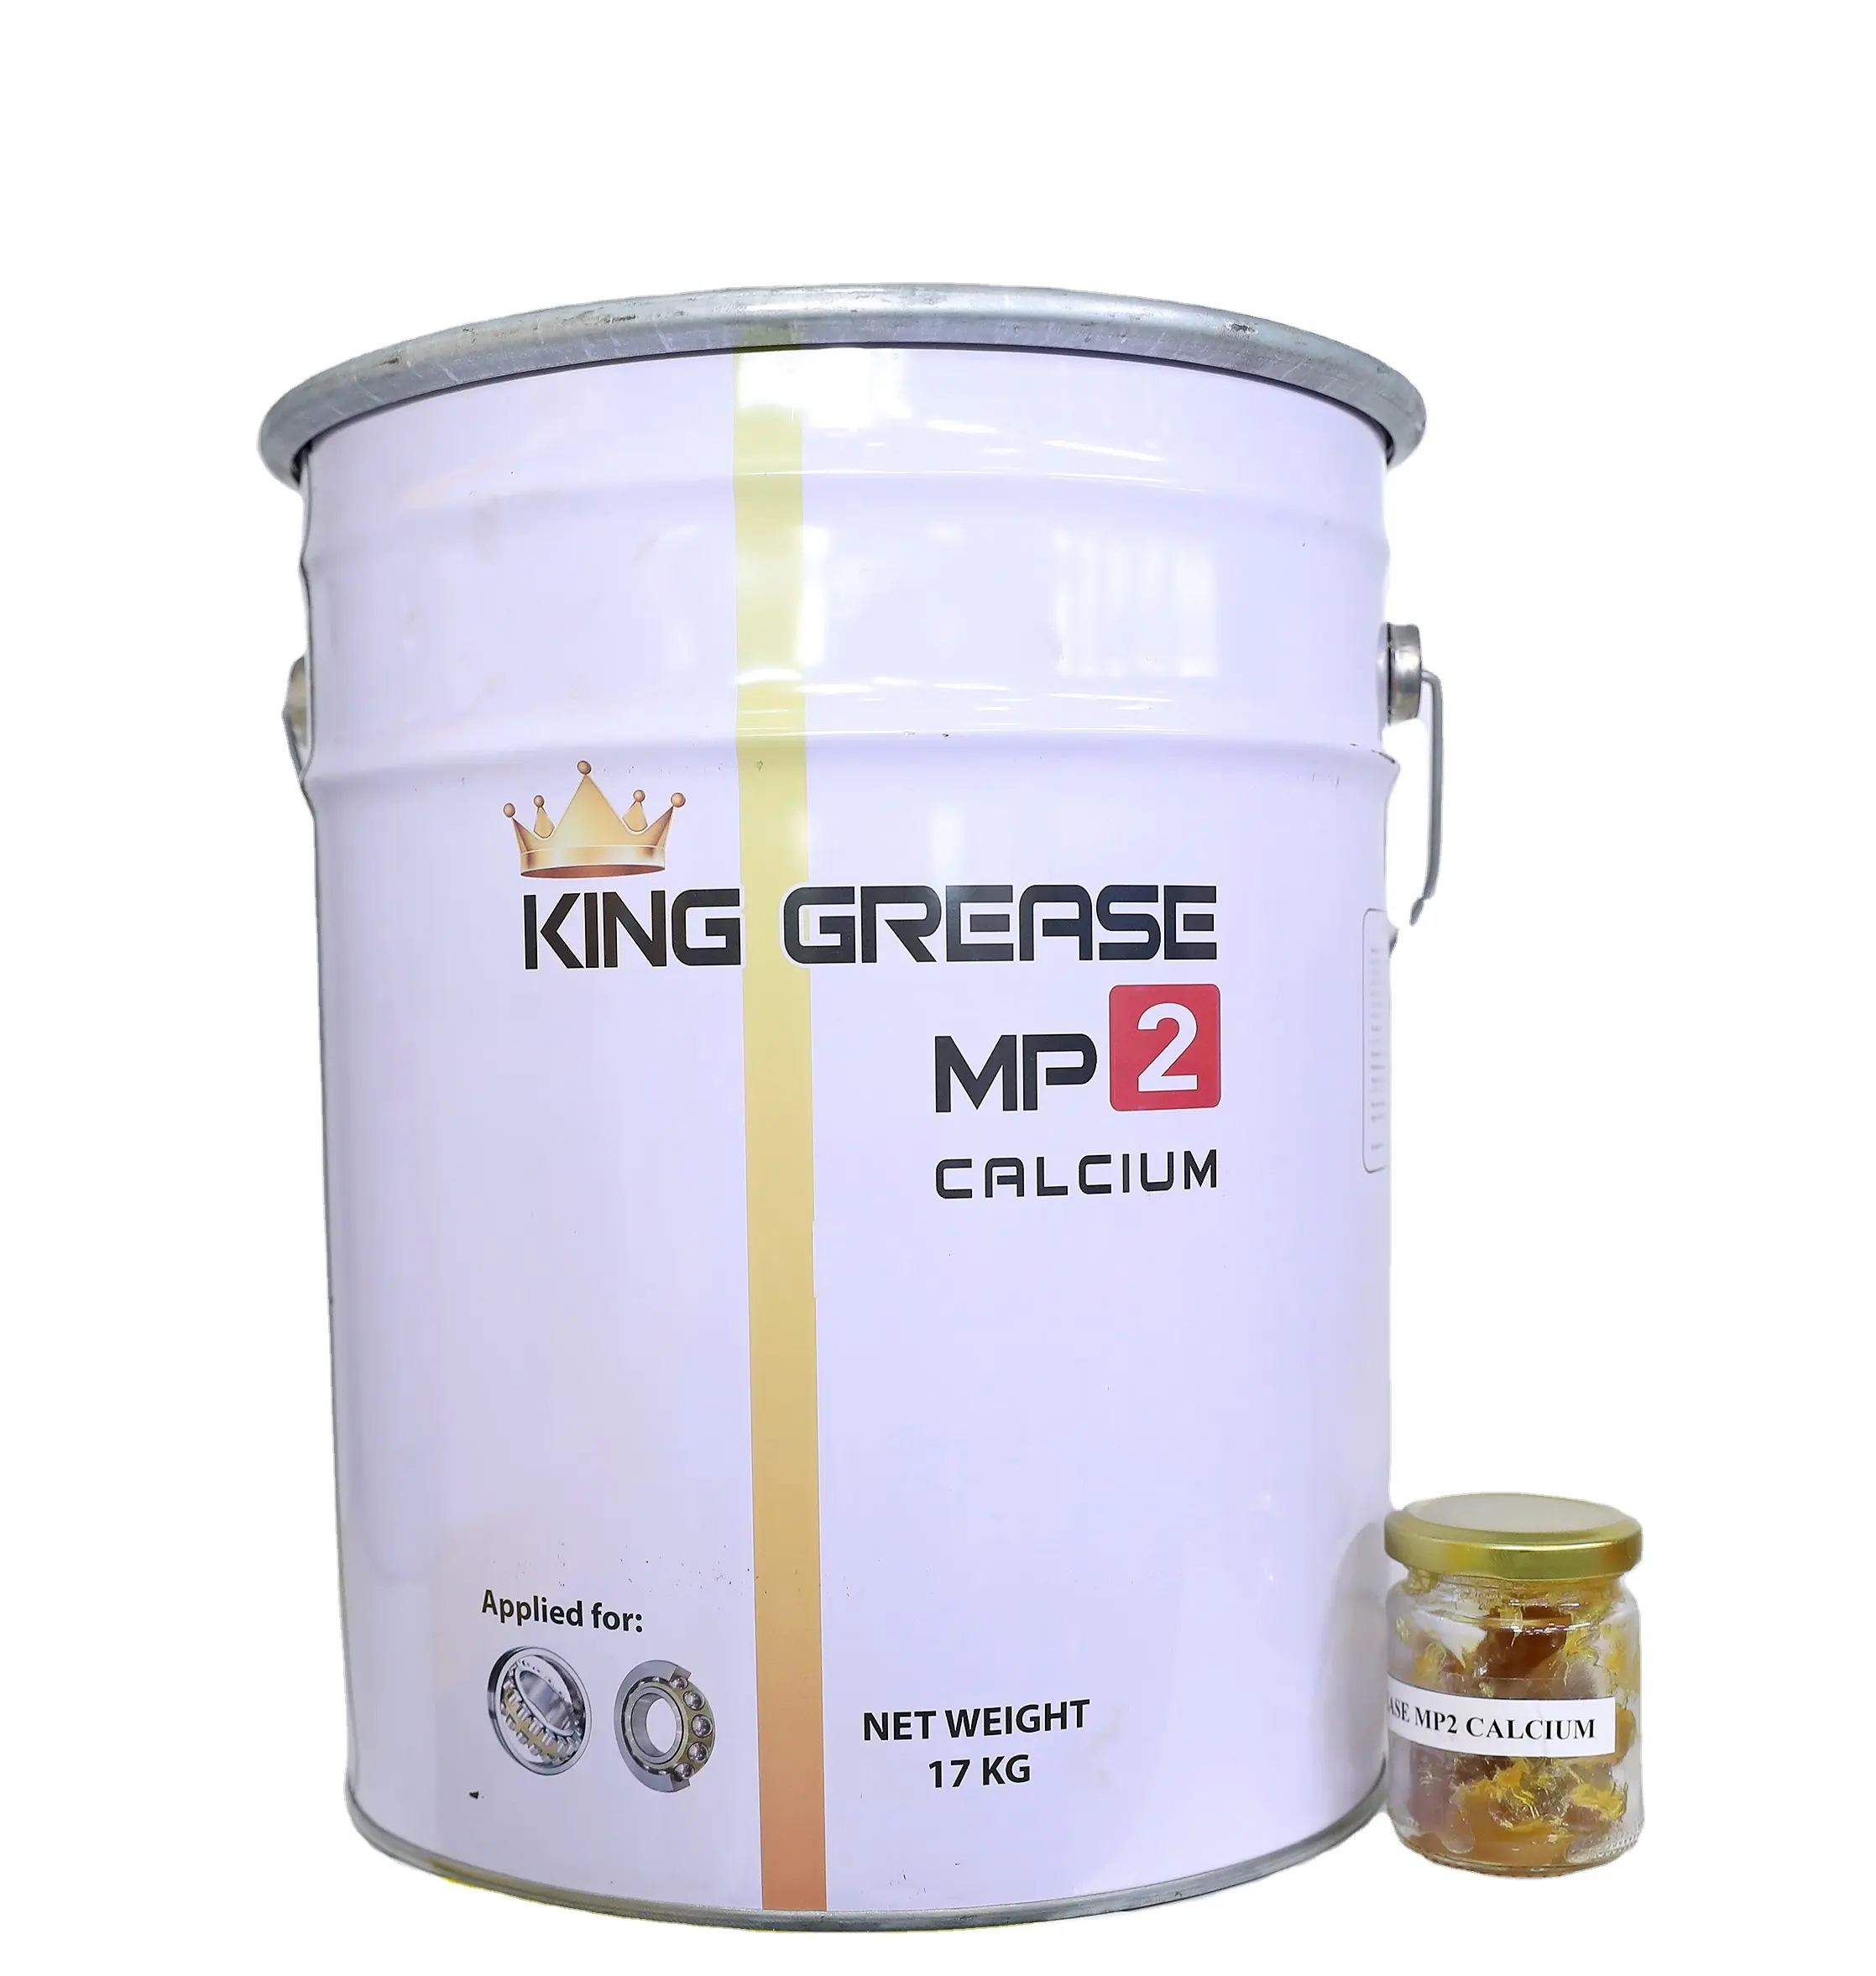 K-OIL KING GREASE CALCIUM MP2ベトナム、長寿命、OEM利用可能アプリケーション冶金。グリース